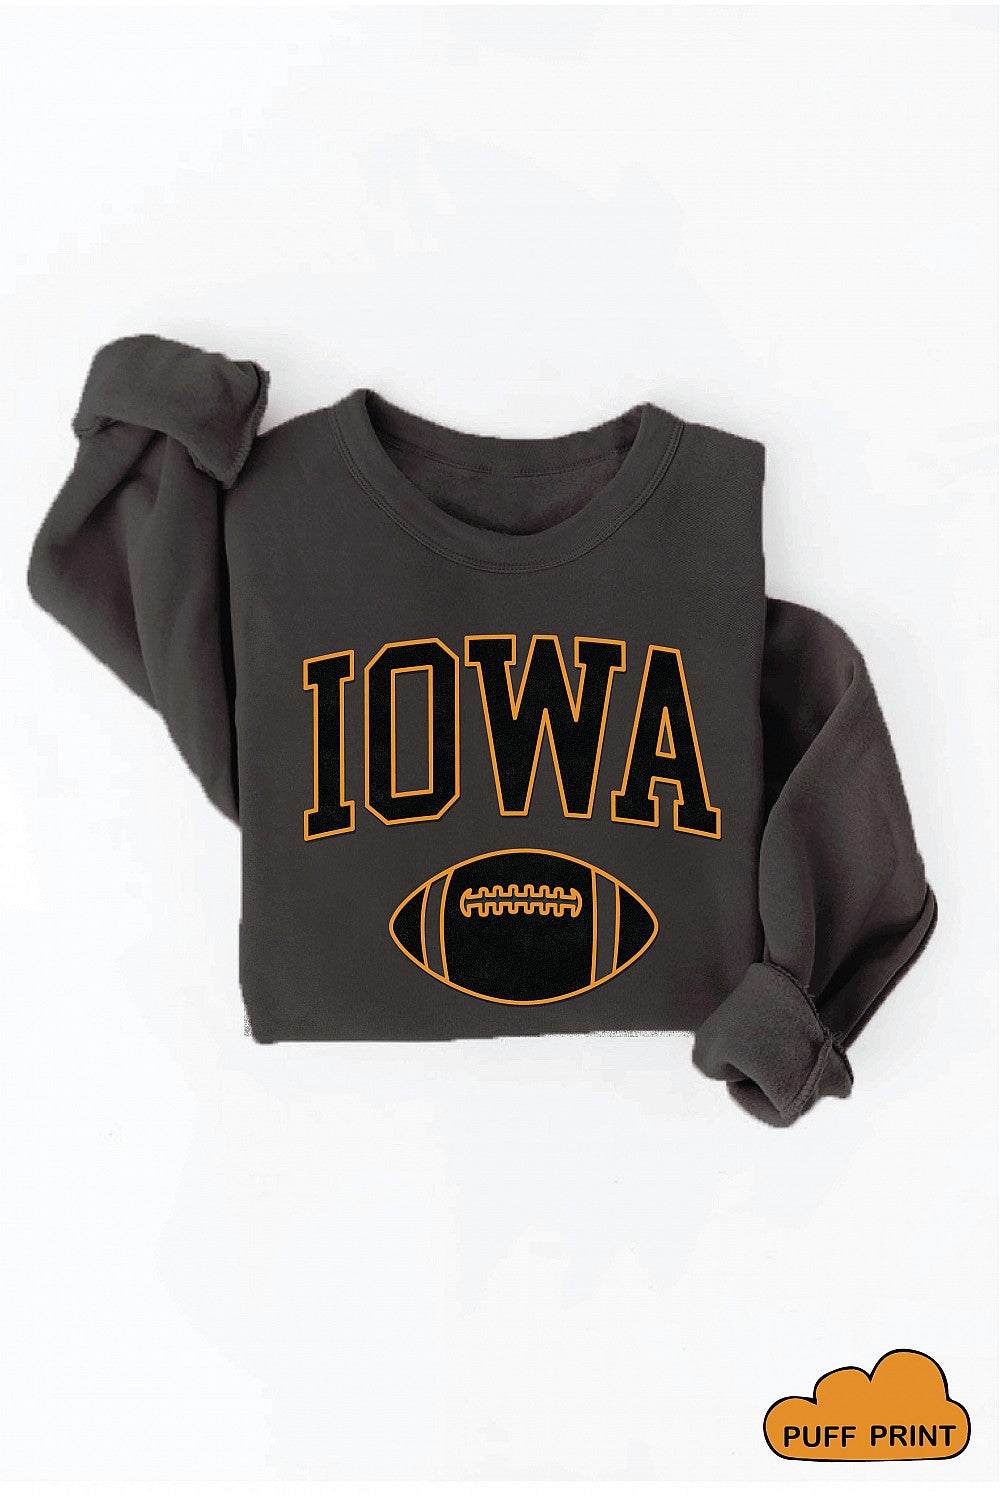 Iowa Football Puff Print Sweatshirt I PLUS